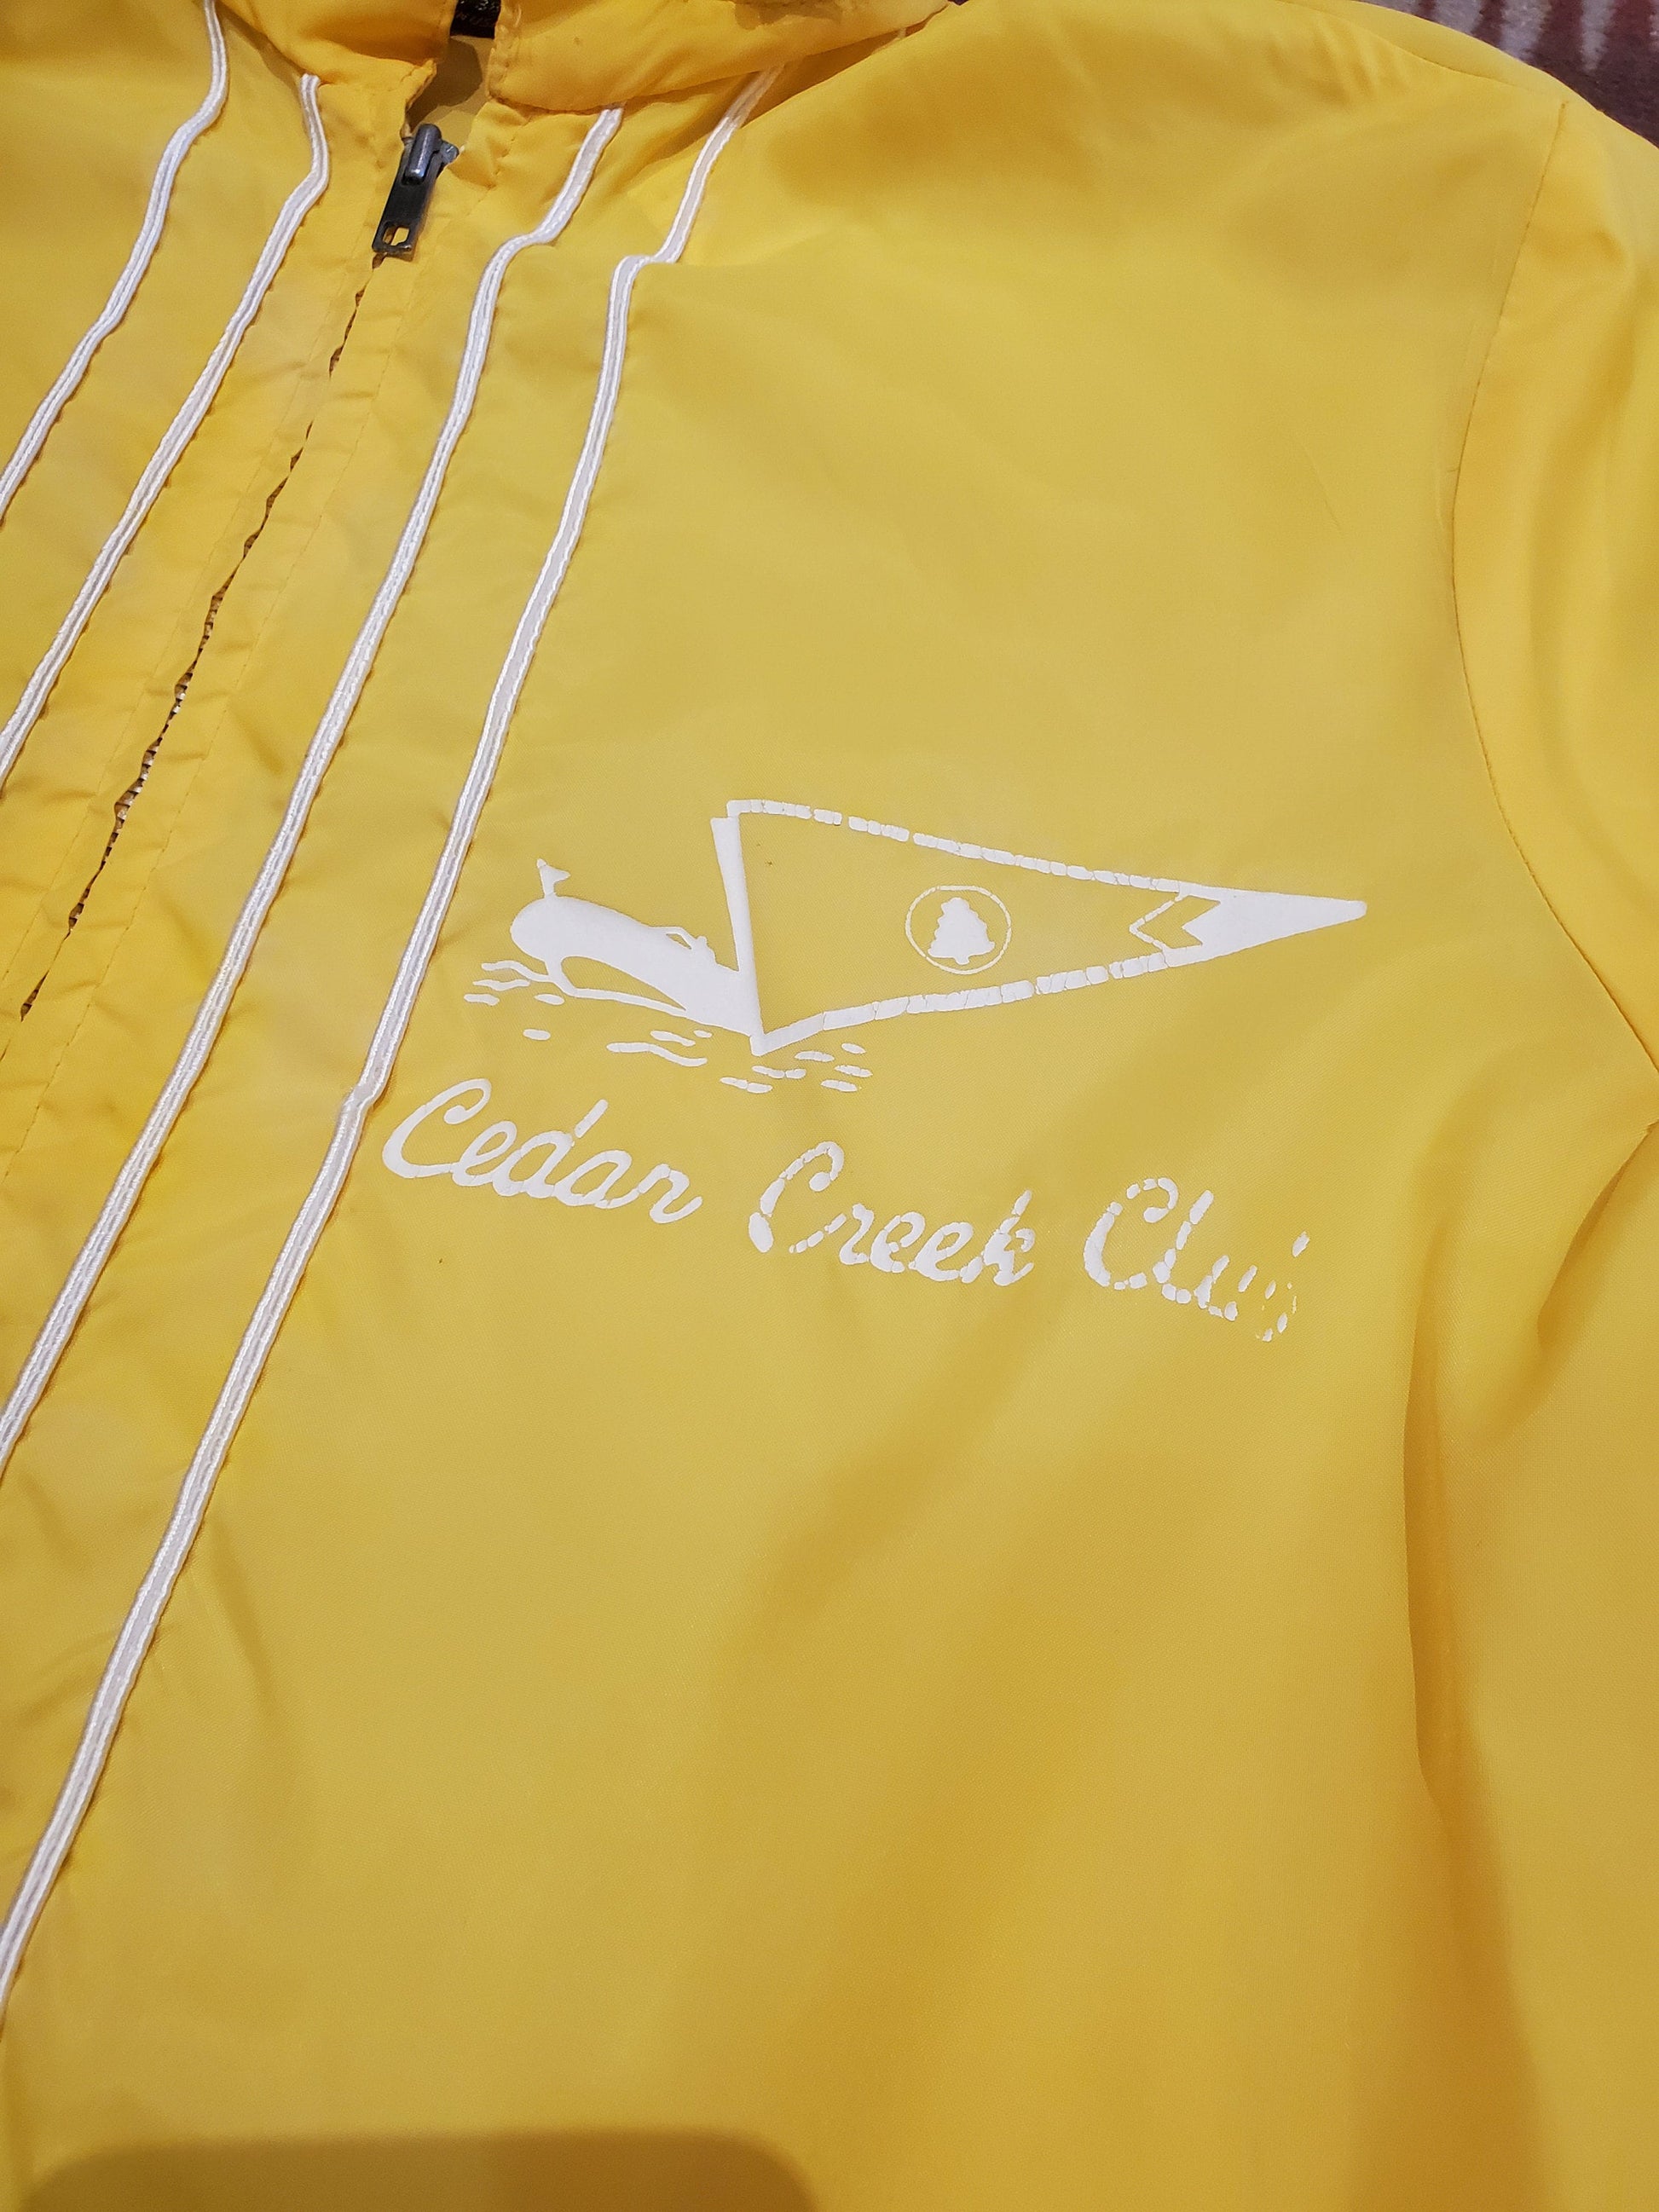 1970s Pla-Jac Cedar Creek Club Nylon Windbreaker Jacket Made in USA Size S/M